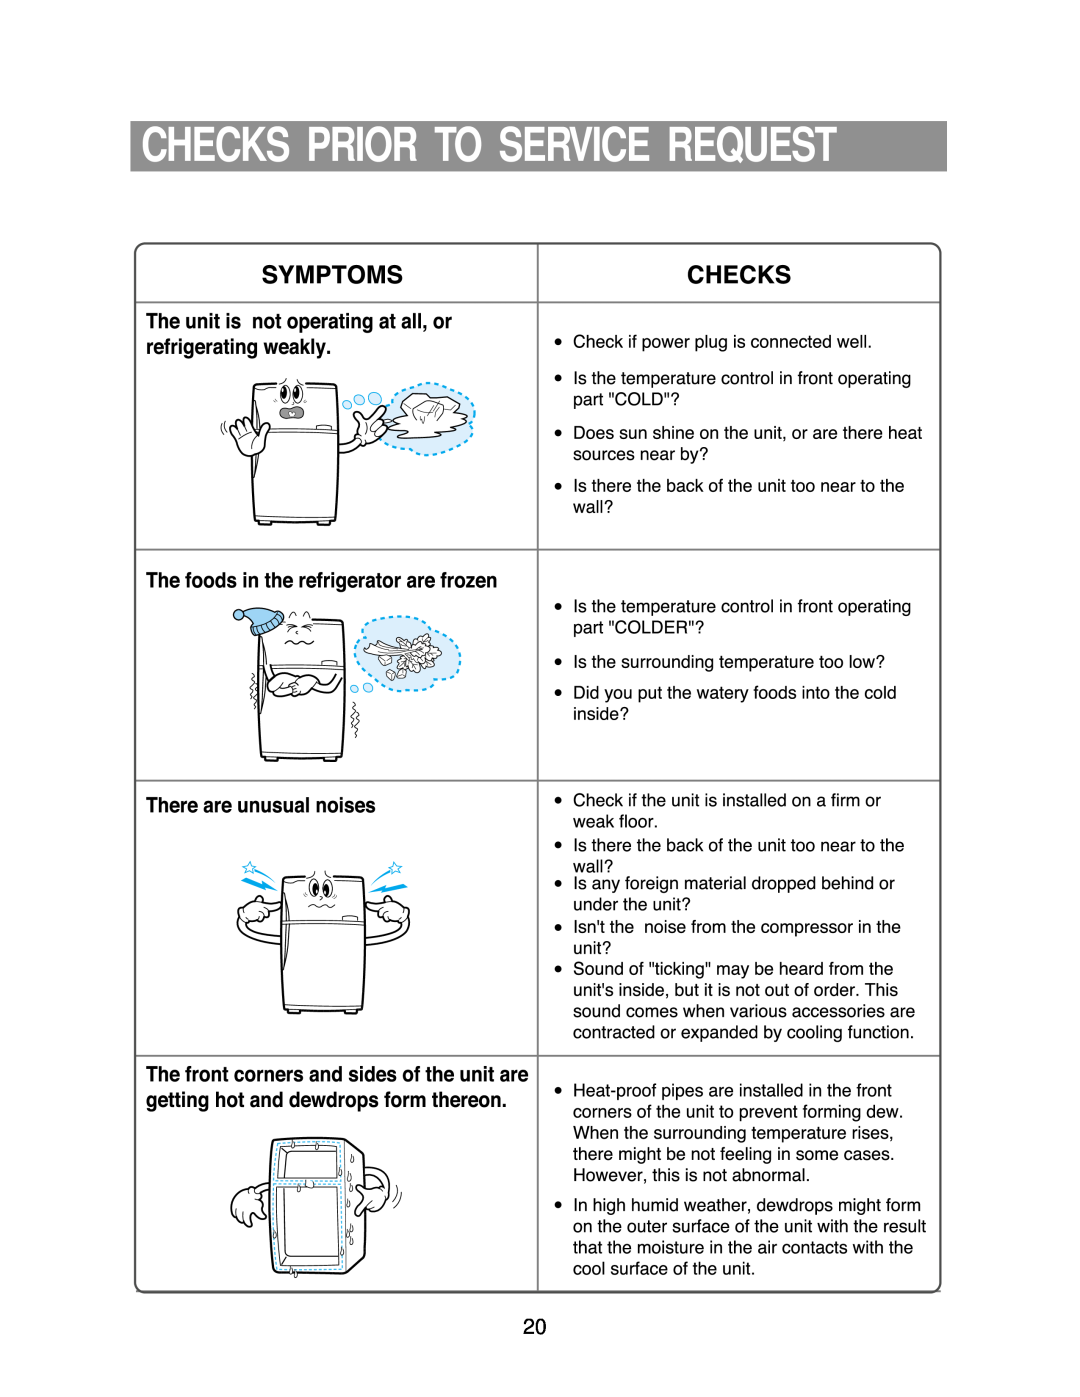 Samsung DA68-01258A owner manual Checks Prior To Service Request 